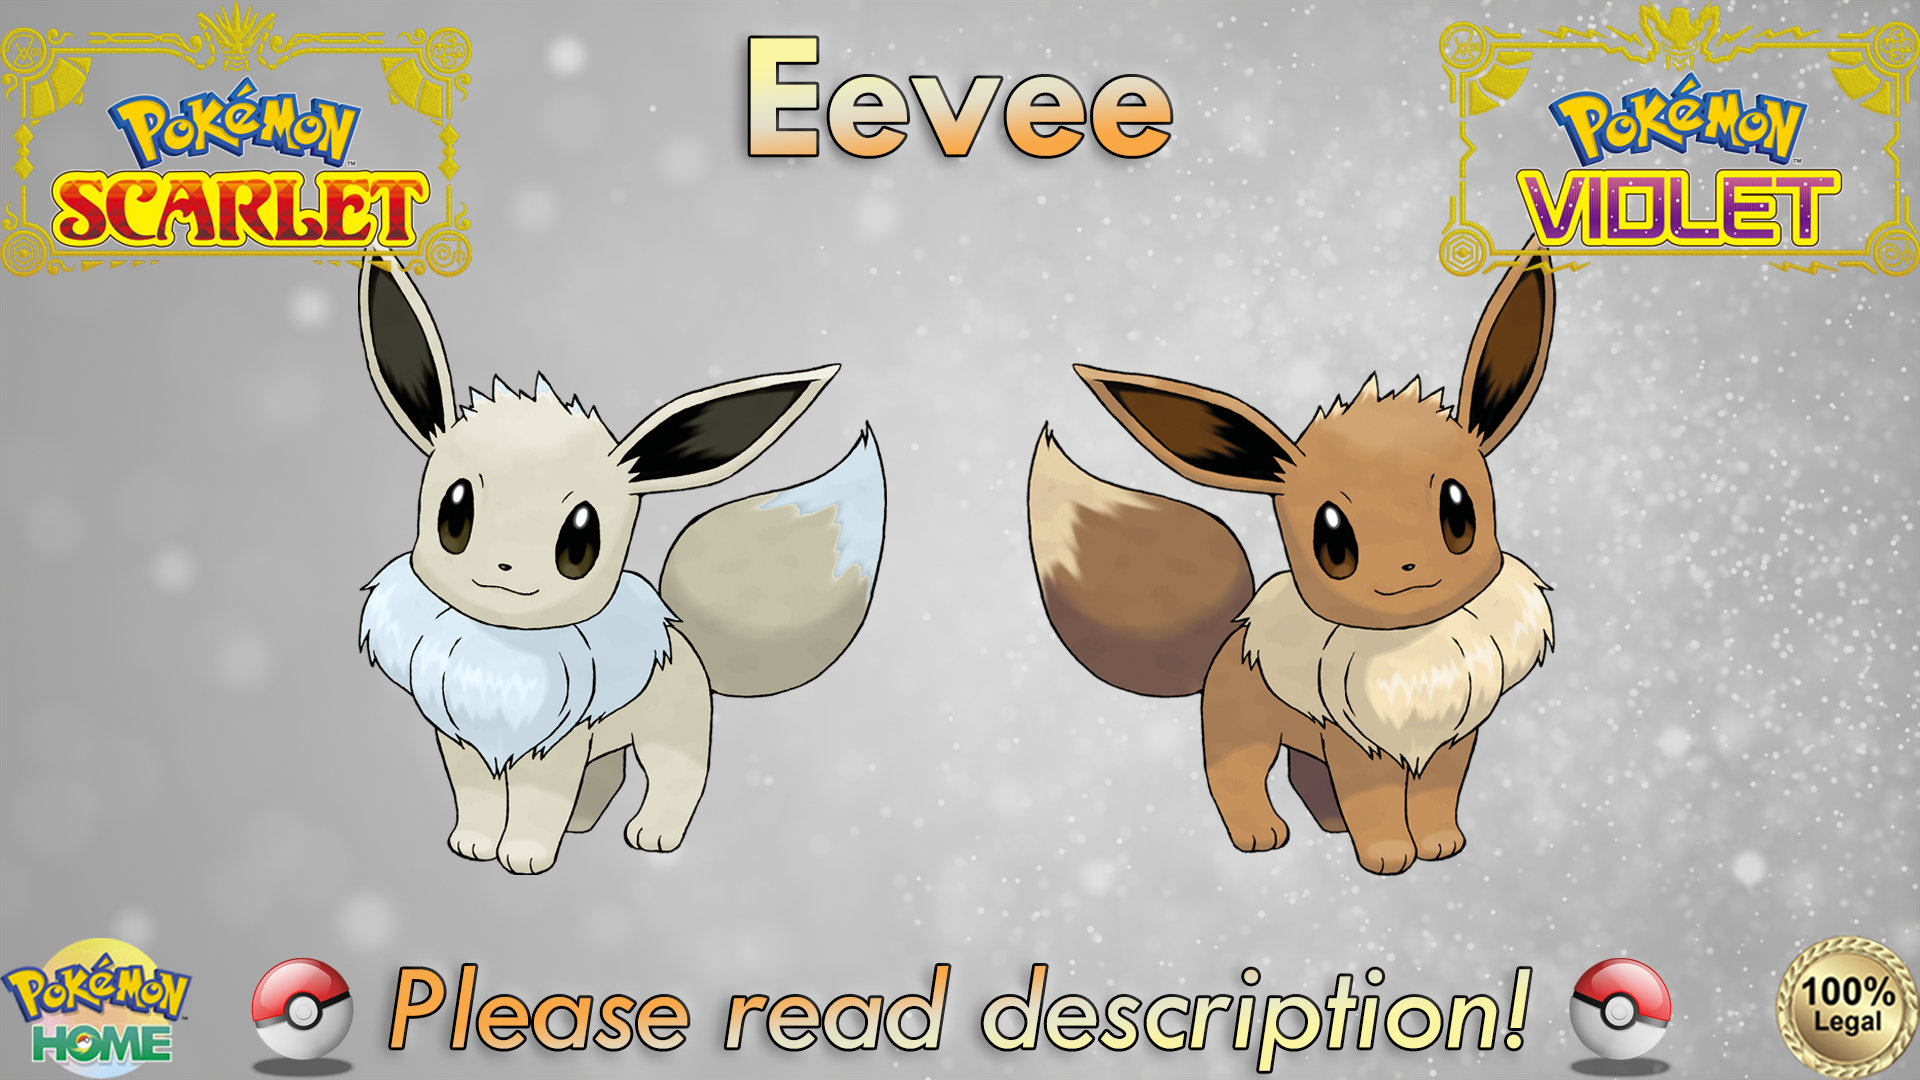 A line of eevee cute, including a shiny eevee.